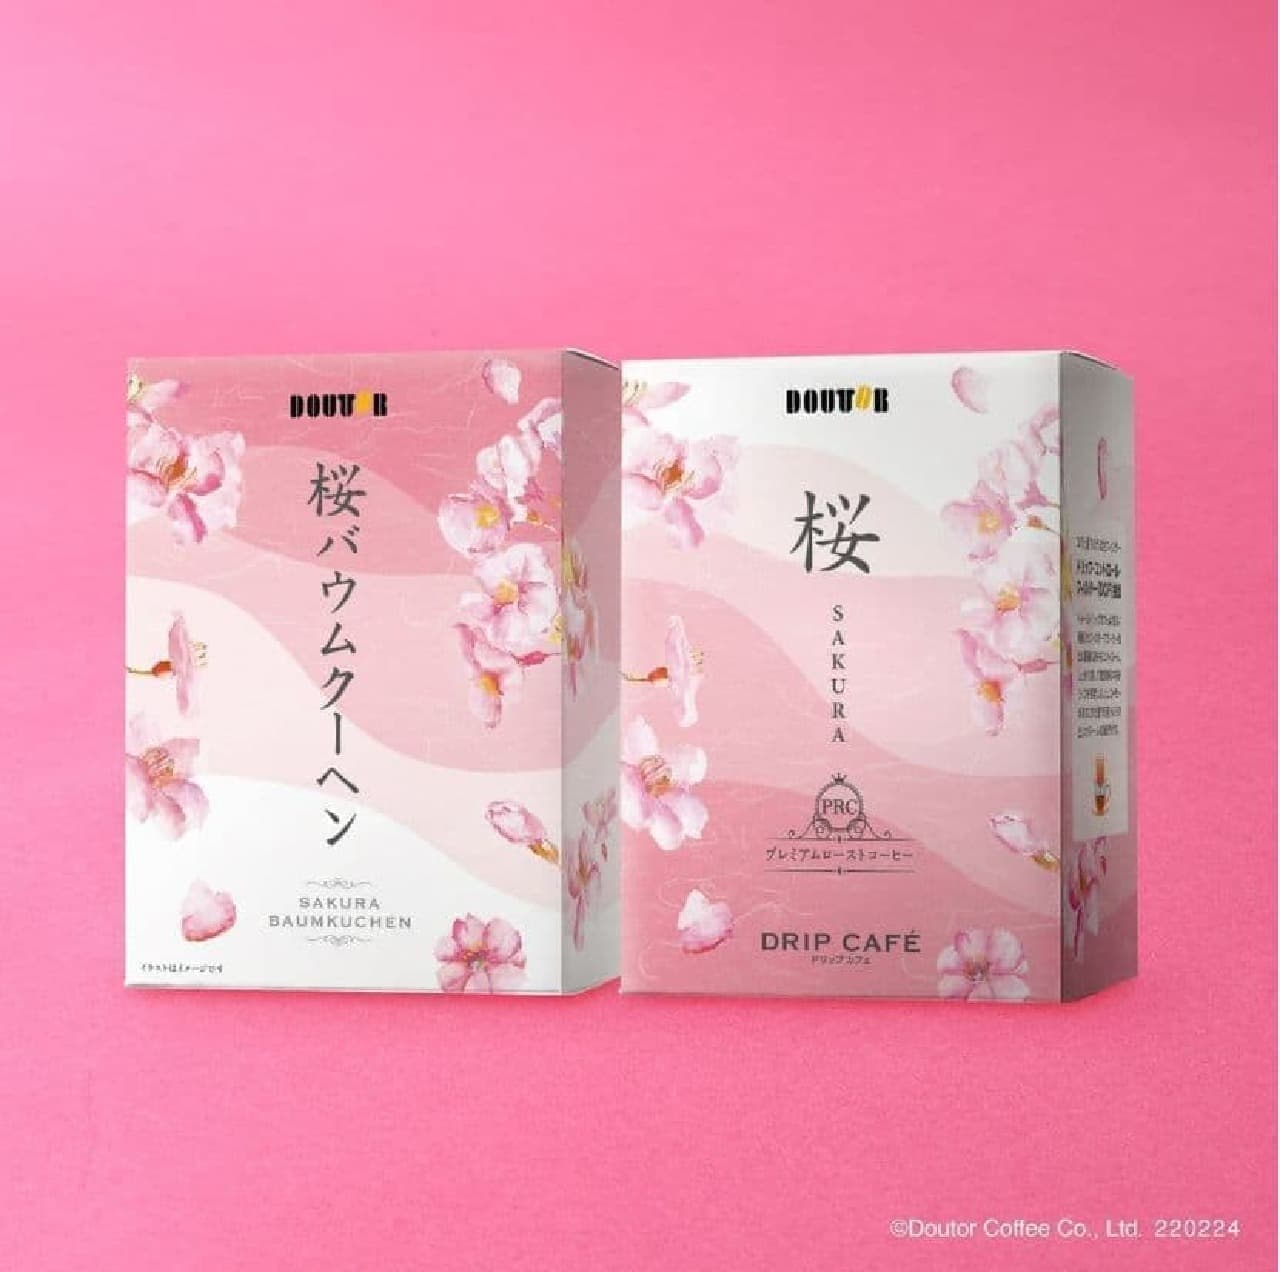 Doutor "Premium Roast Coffee Sakura & Sakura Baumkuchen Set